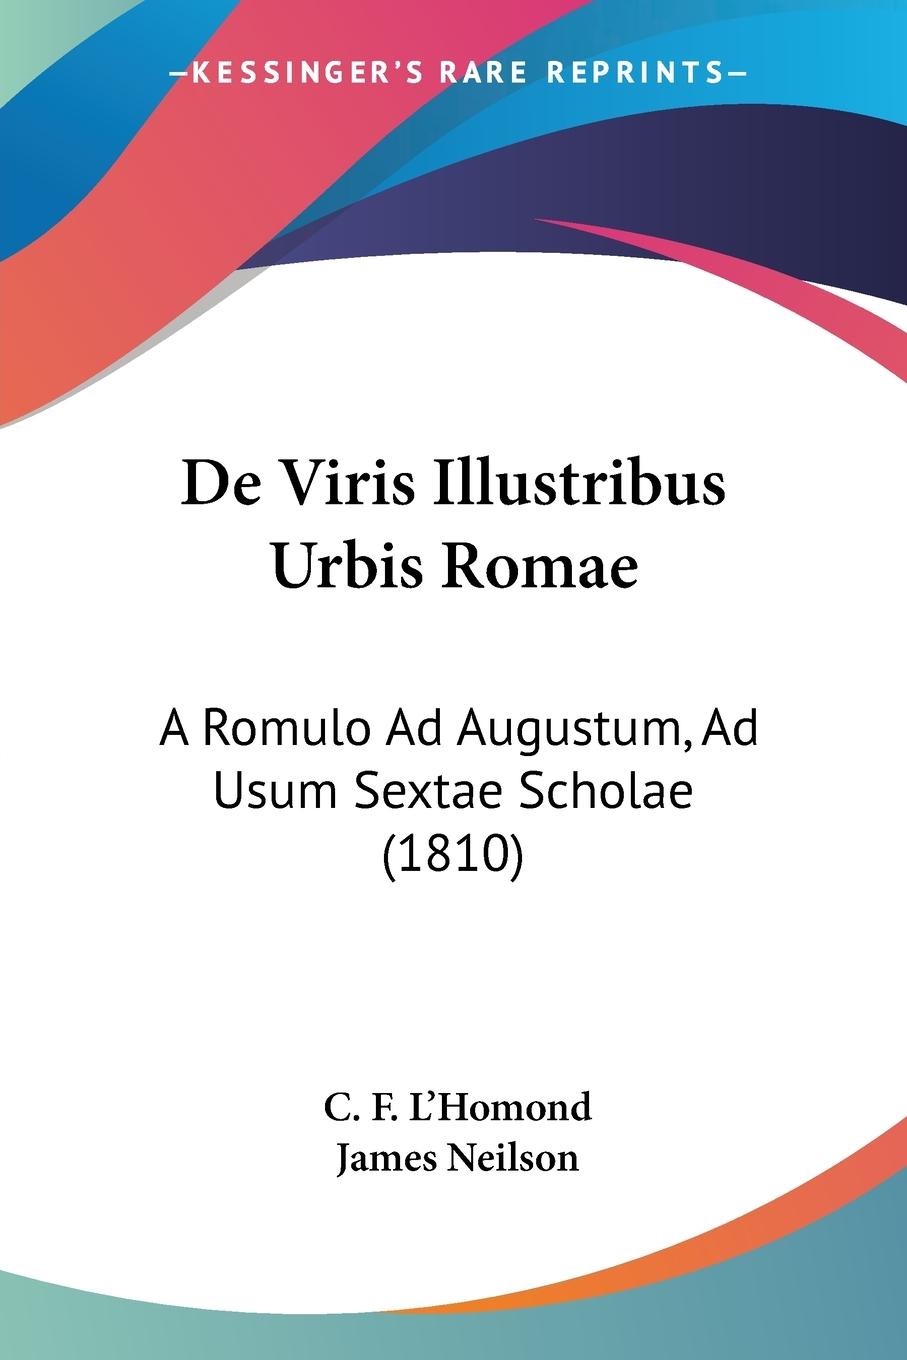 De Viris Illustribus Urbis Romae - L Homond, C. F. Neilson, James